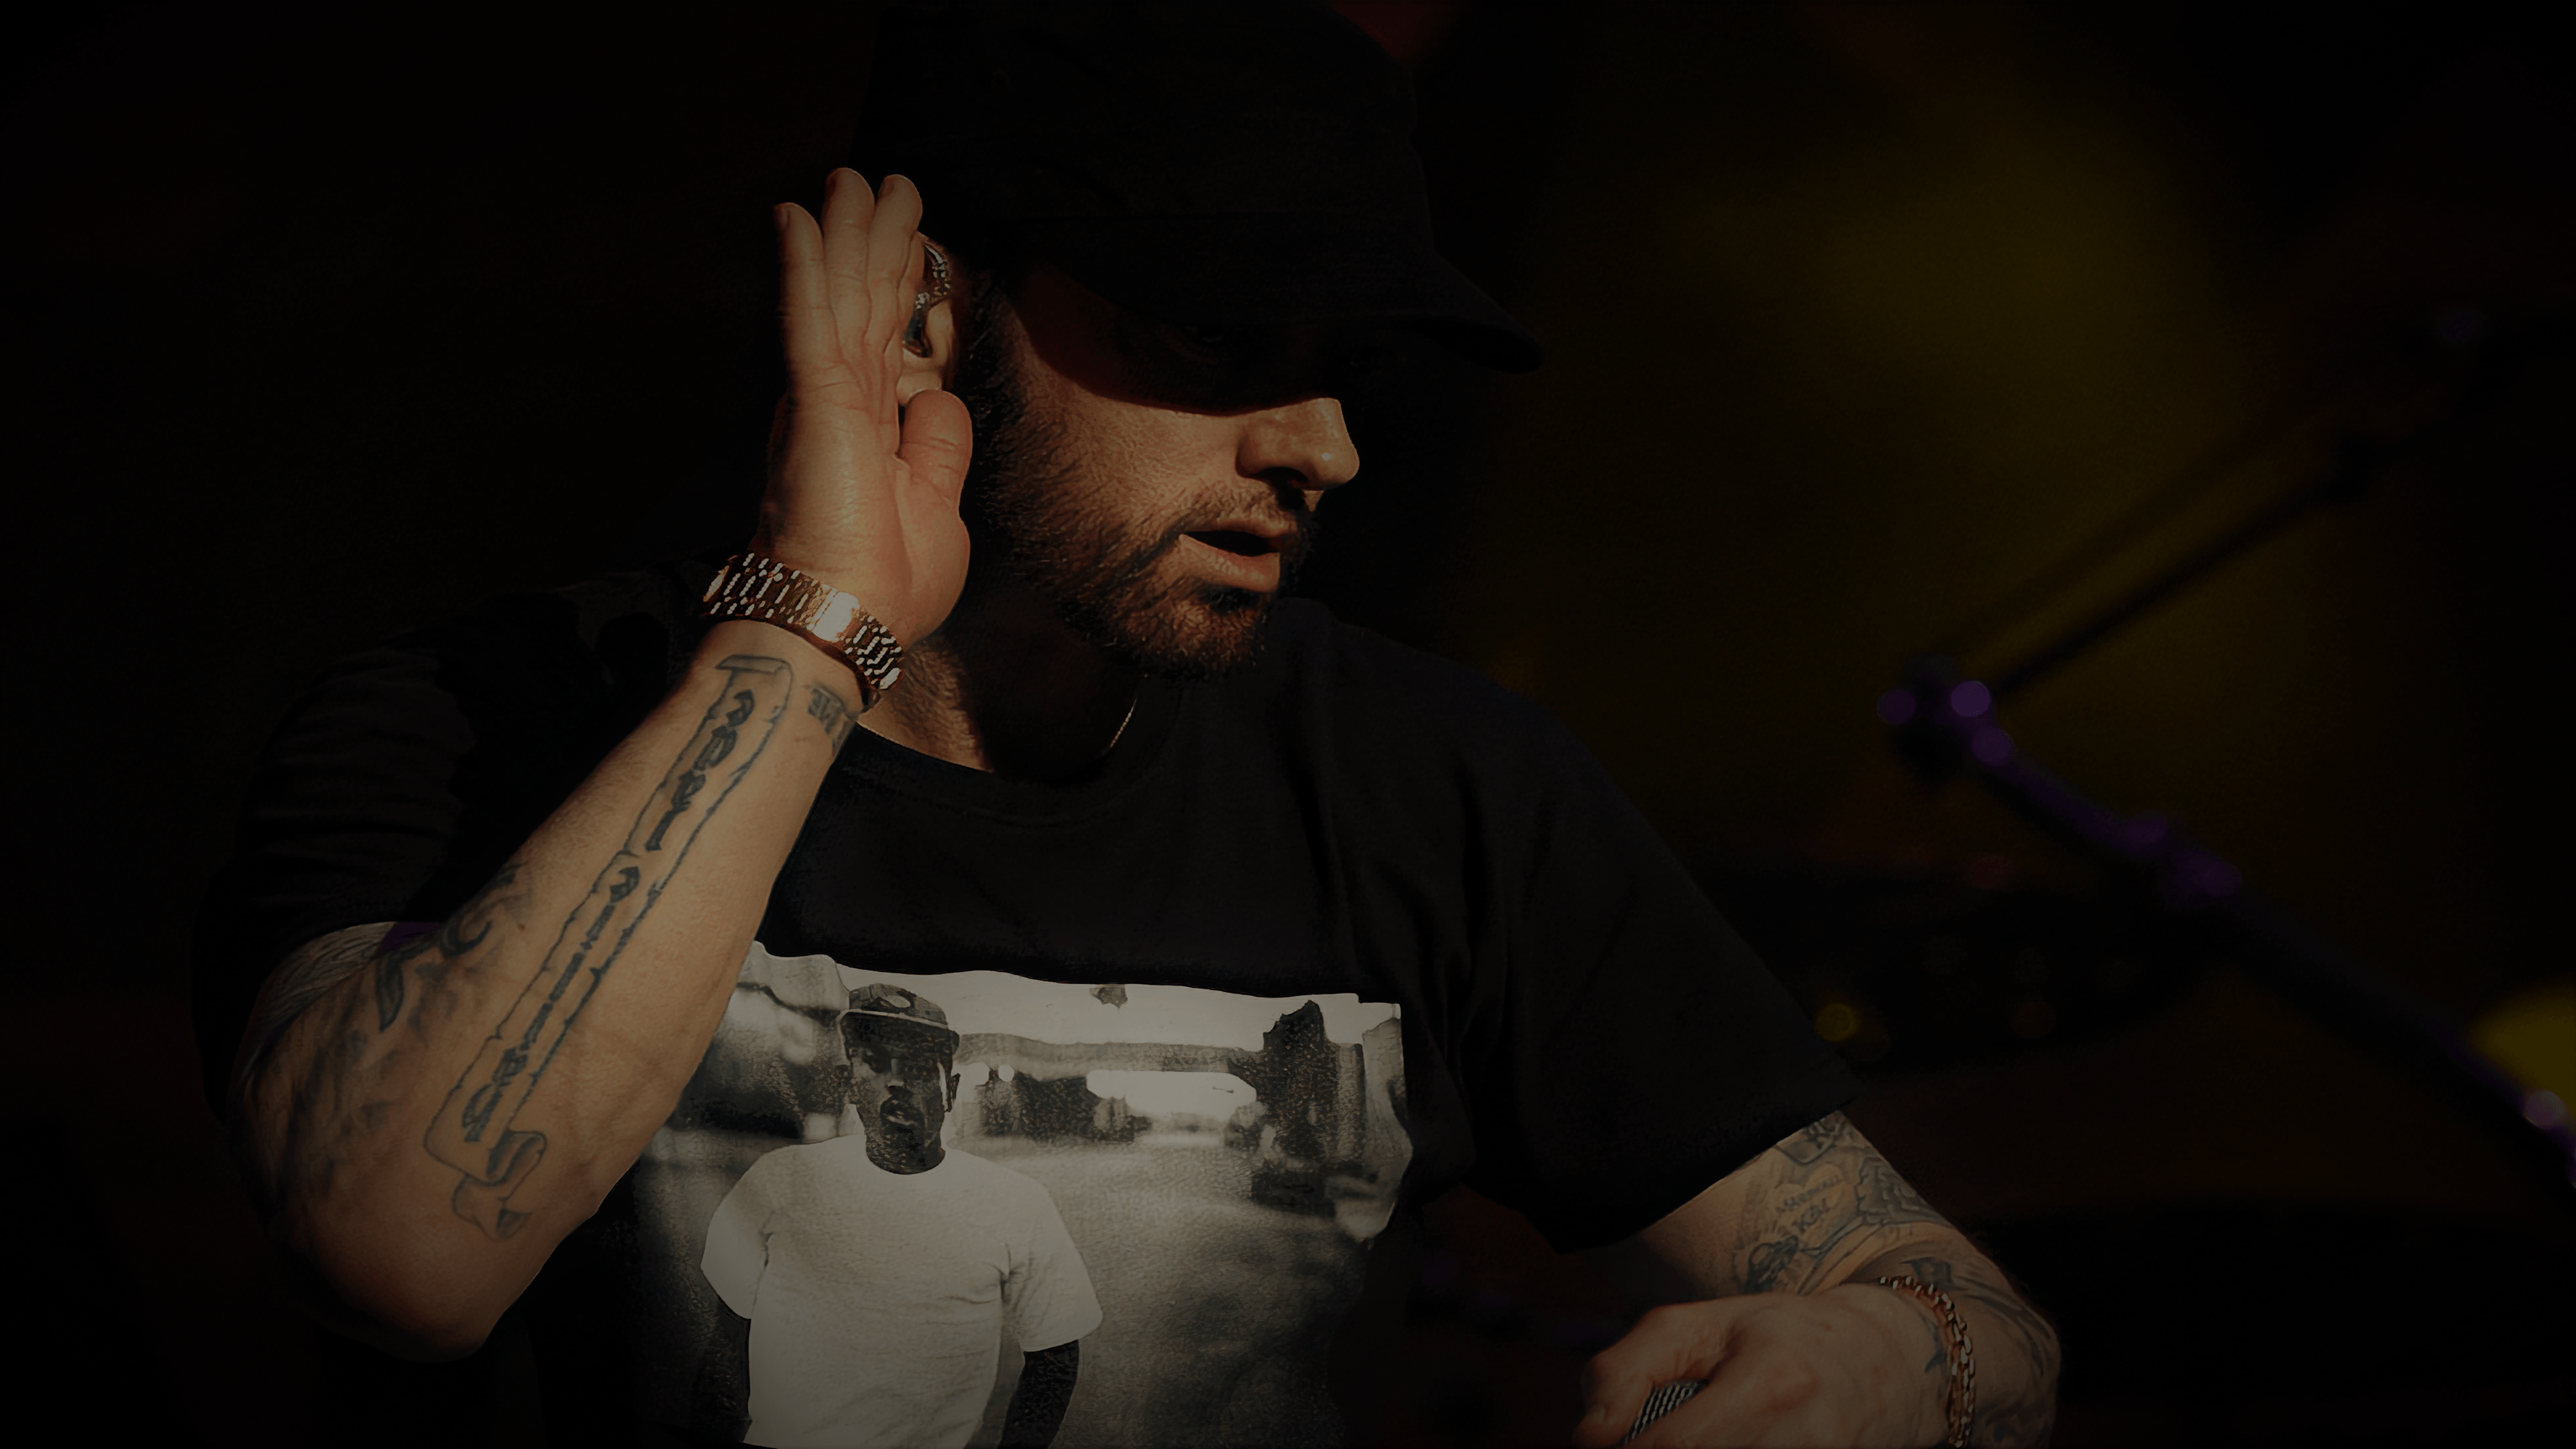 Eminem Coachella 2018 live 4k Ultra HD Wallpaper. Background Image